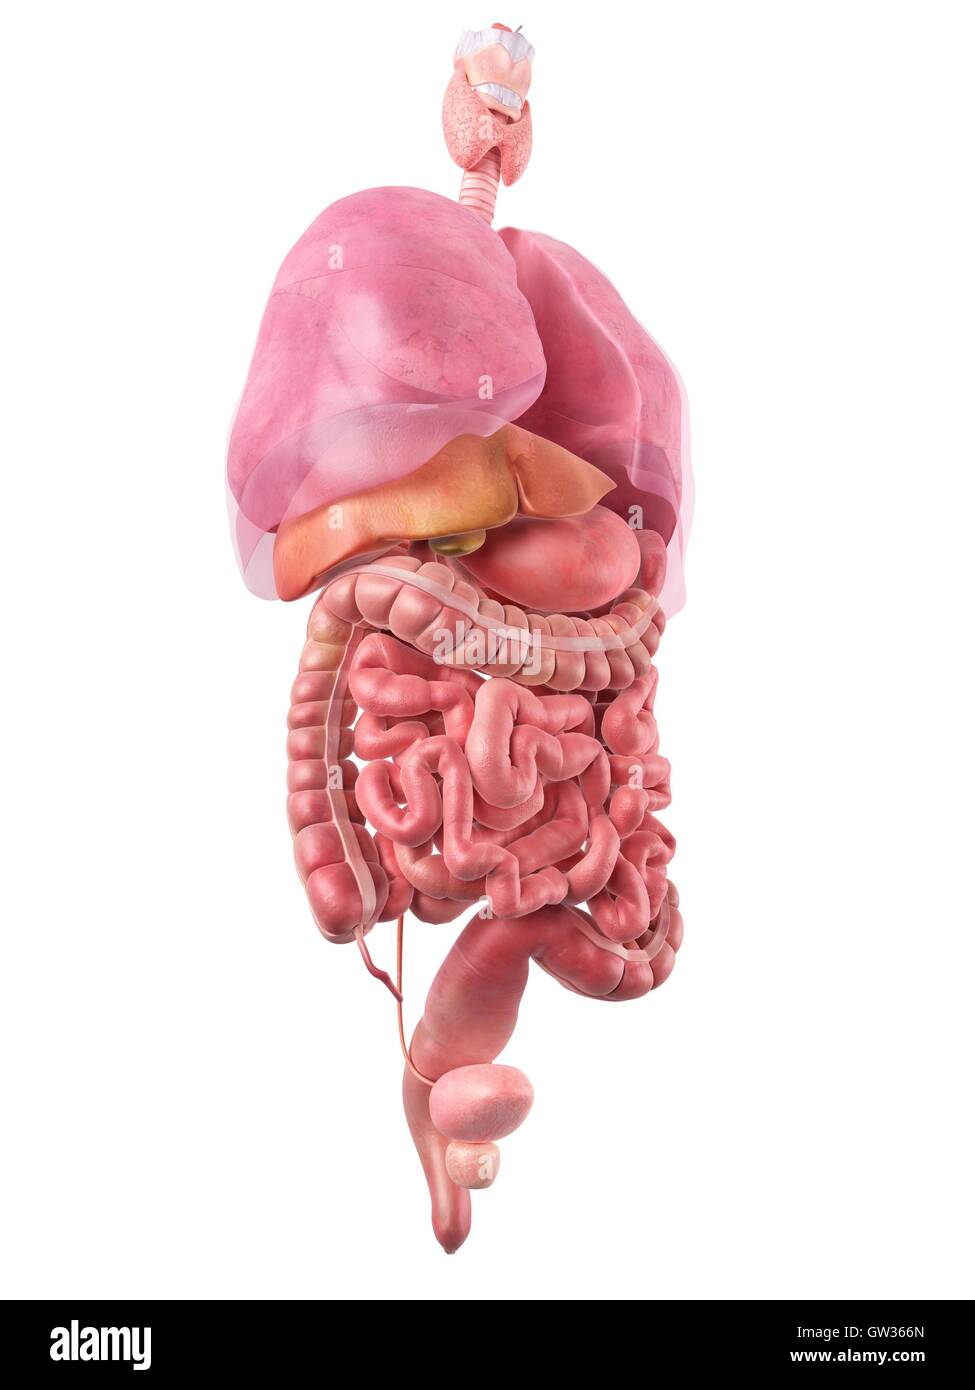 Human internal organs, illustration. Stock Photo